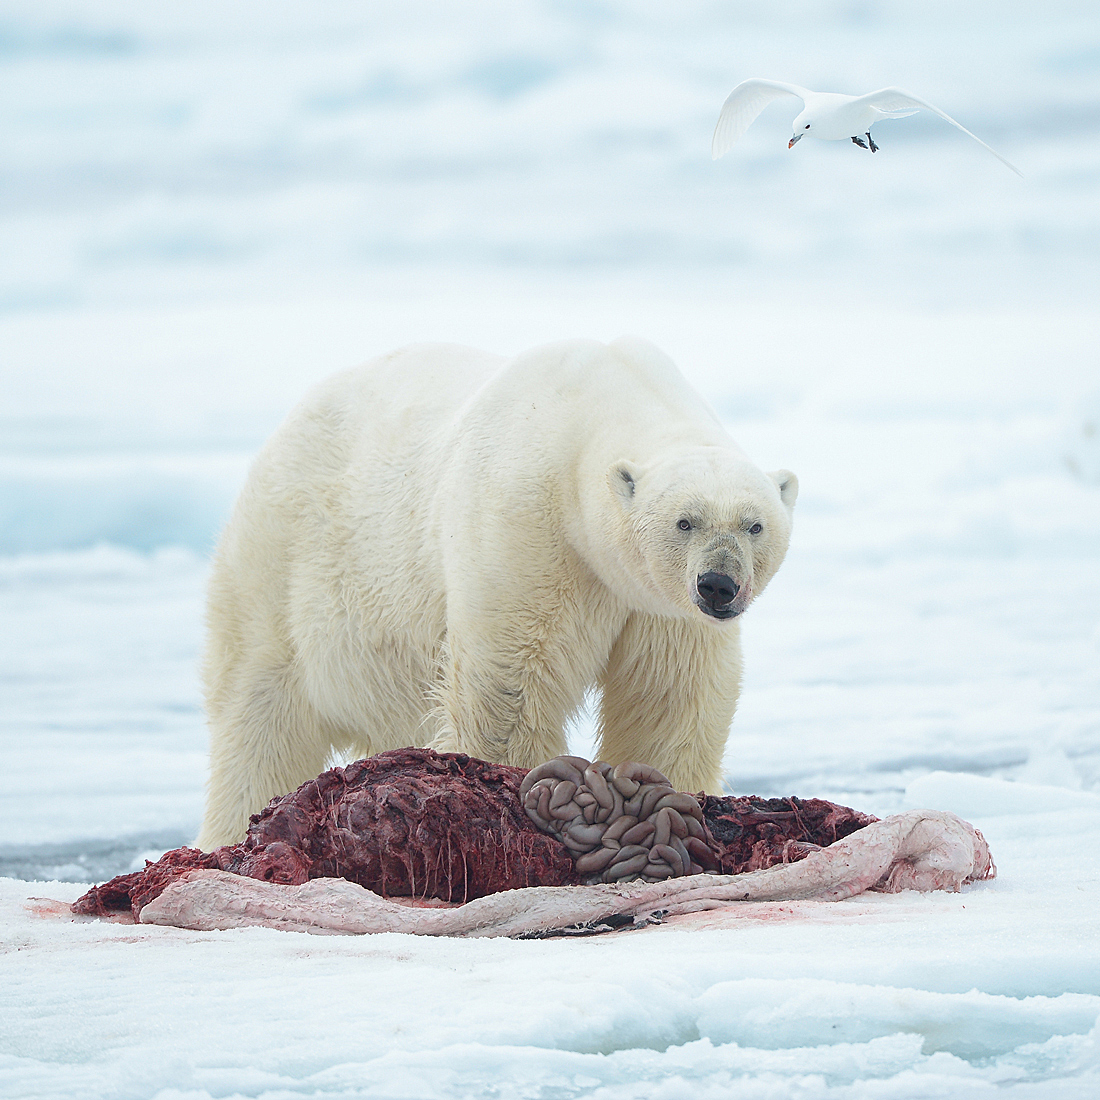 Ivory Gull circling Polar Bear with prey.